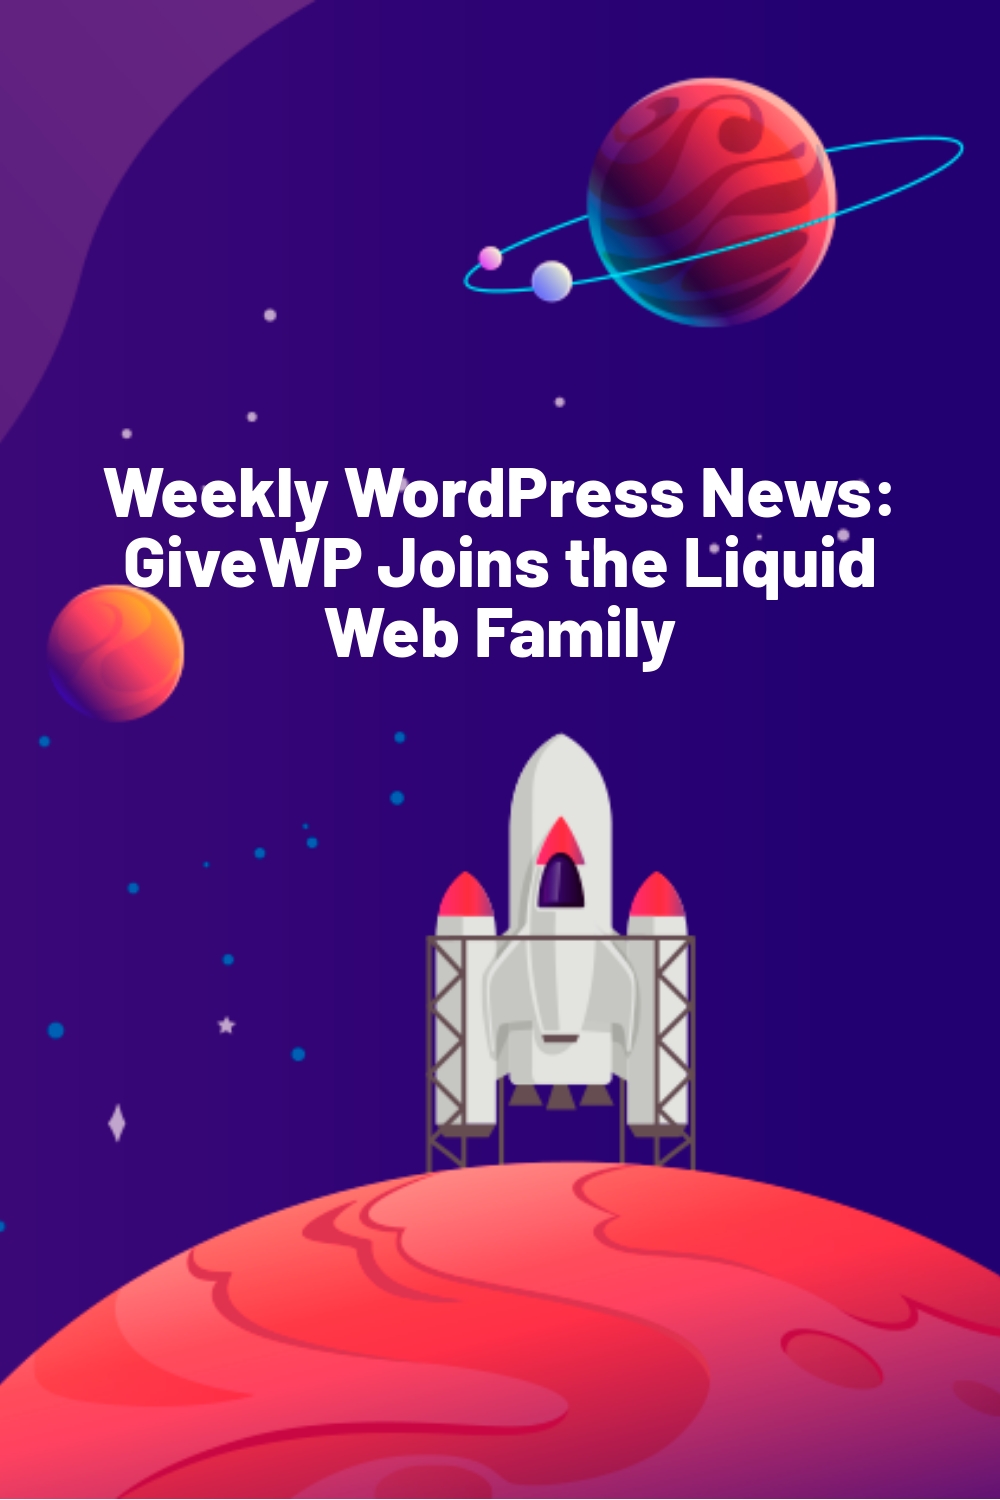 Weekly WordPress News: GiveWP Joins the Liquid Web Family